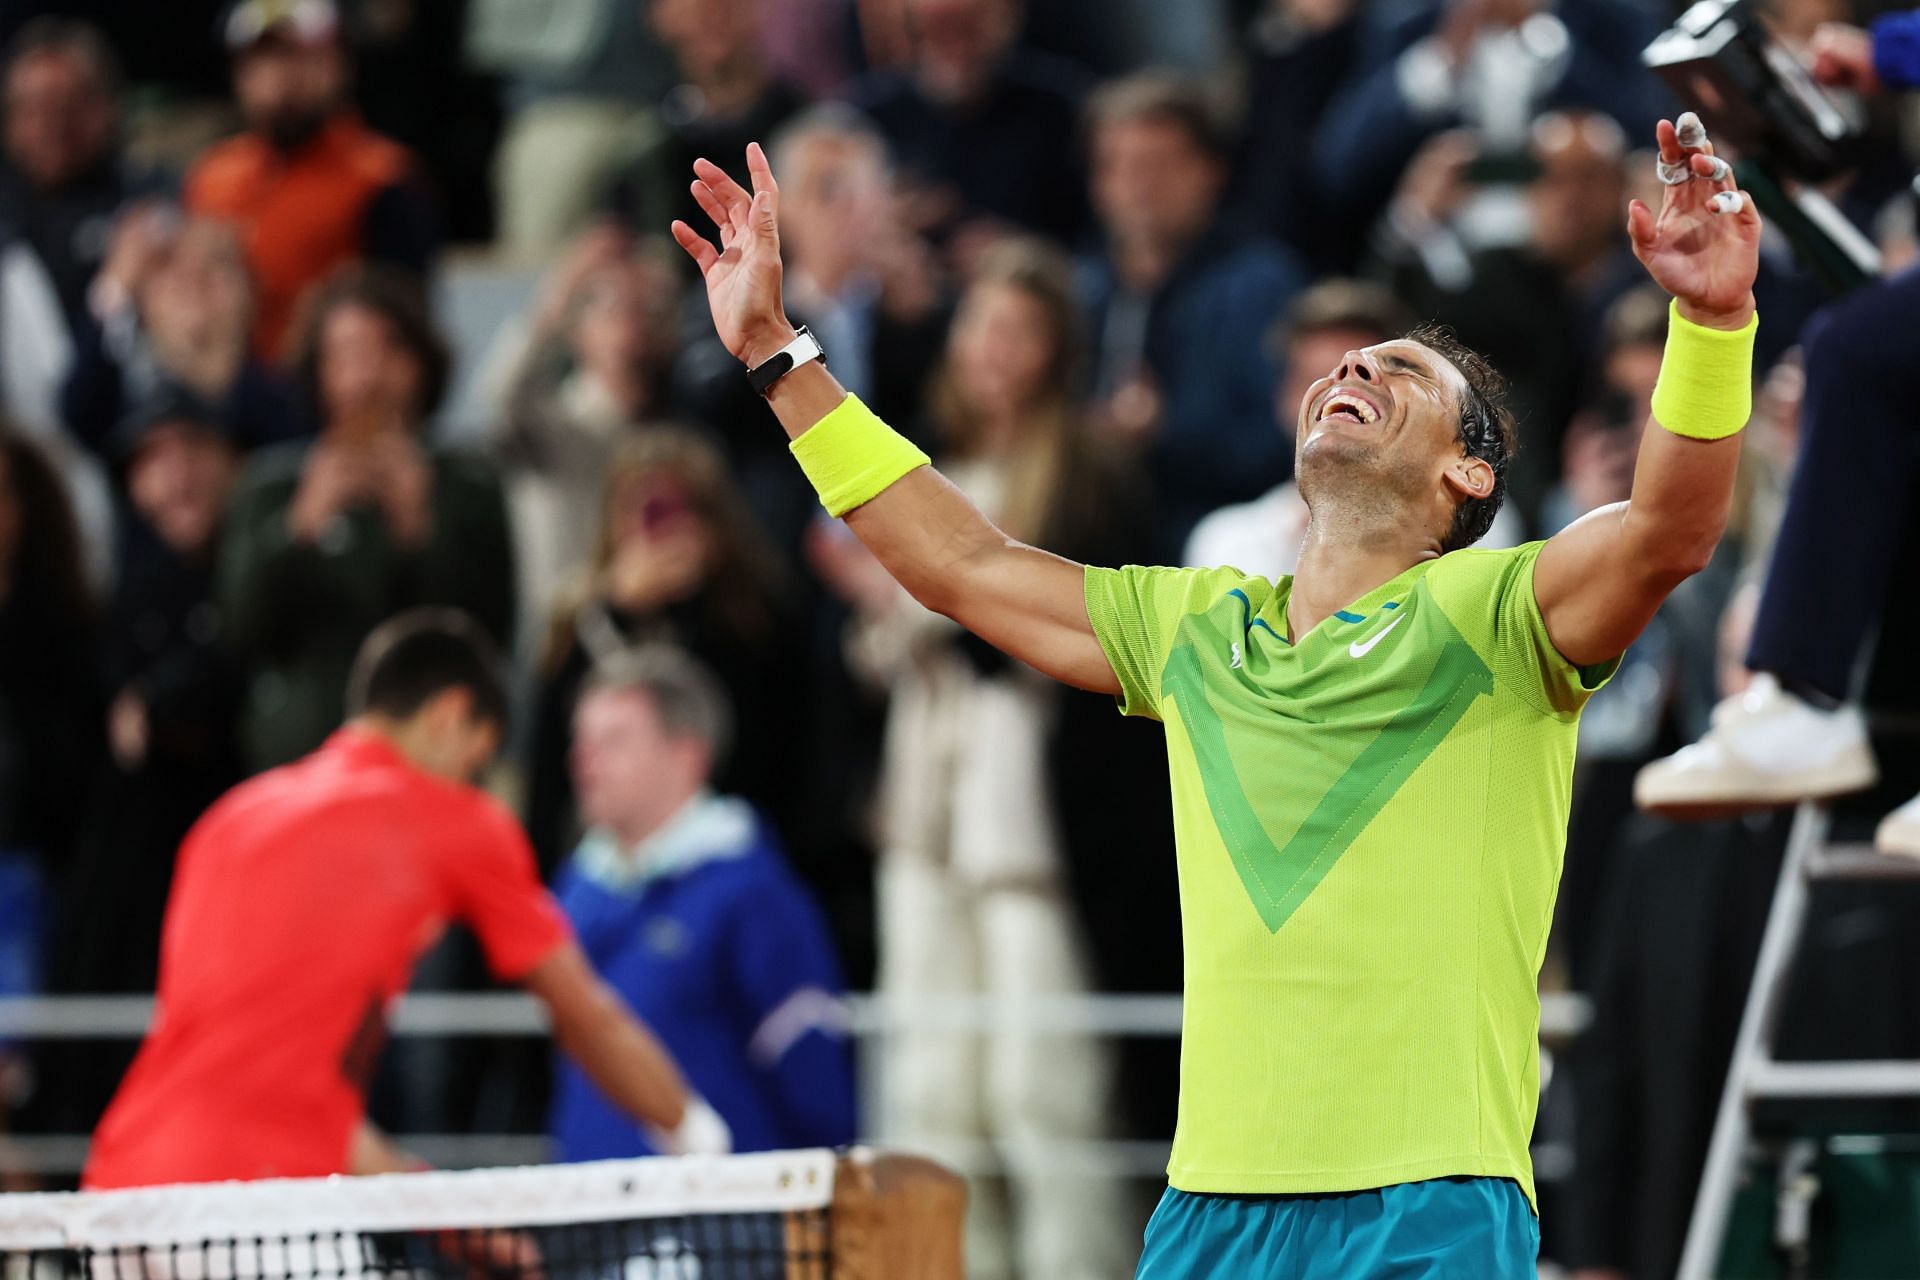 Rafael Nadal prevailed over Djokovic in their 59th career meeting